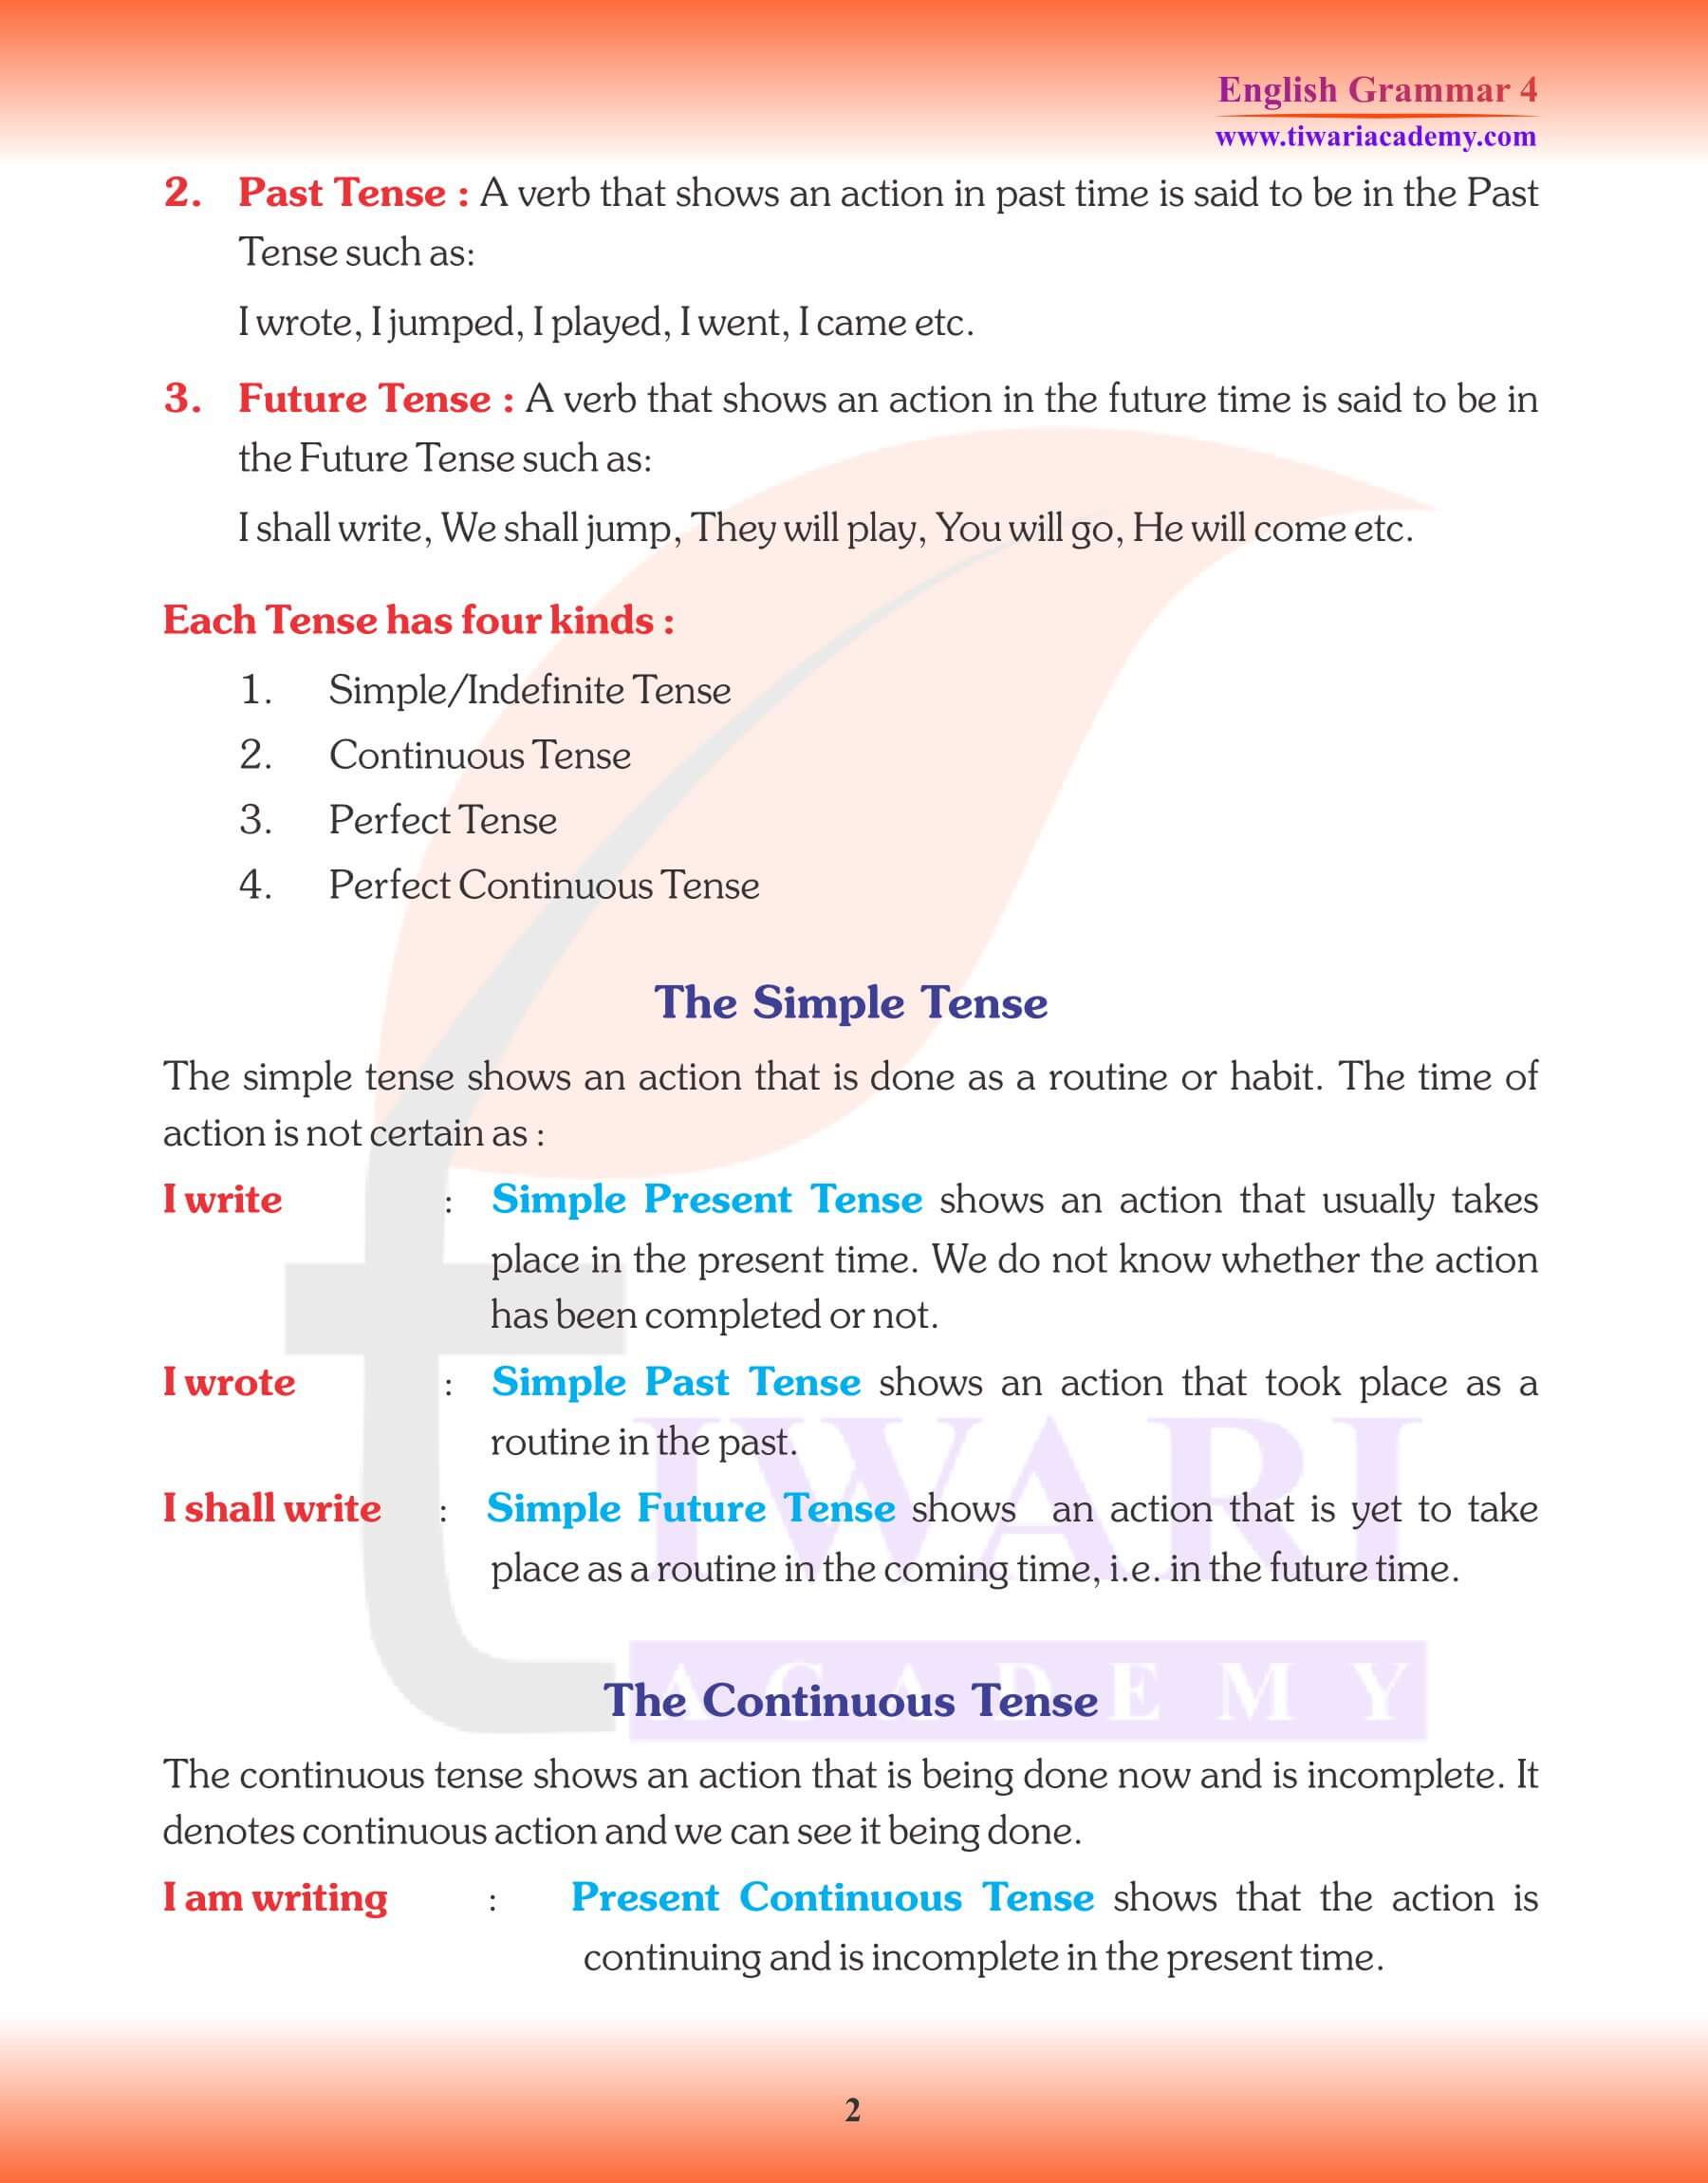 Class 4 English Grammar Tense Practice Exercises